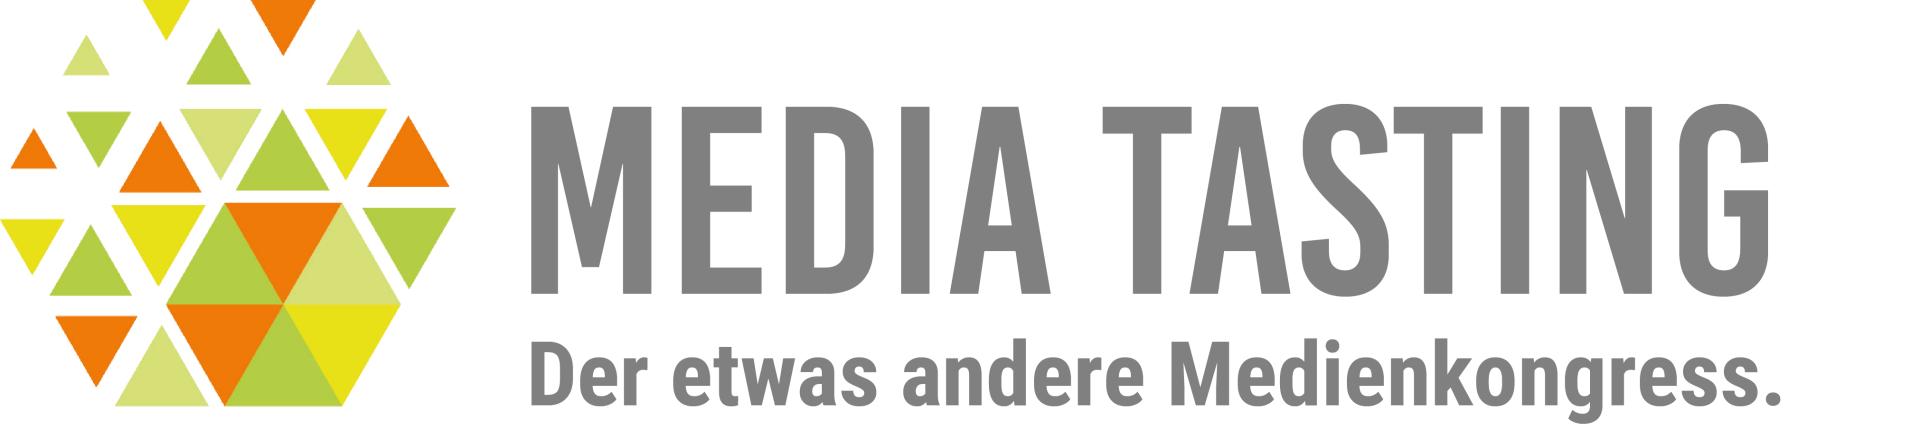 Logo_Media_Tasting_bunt